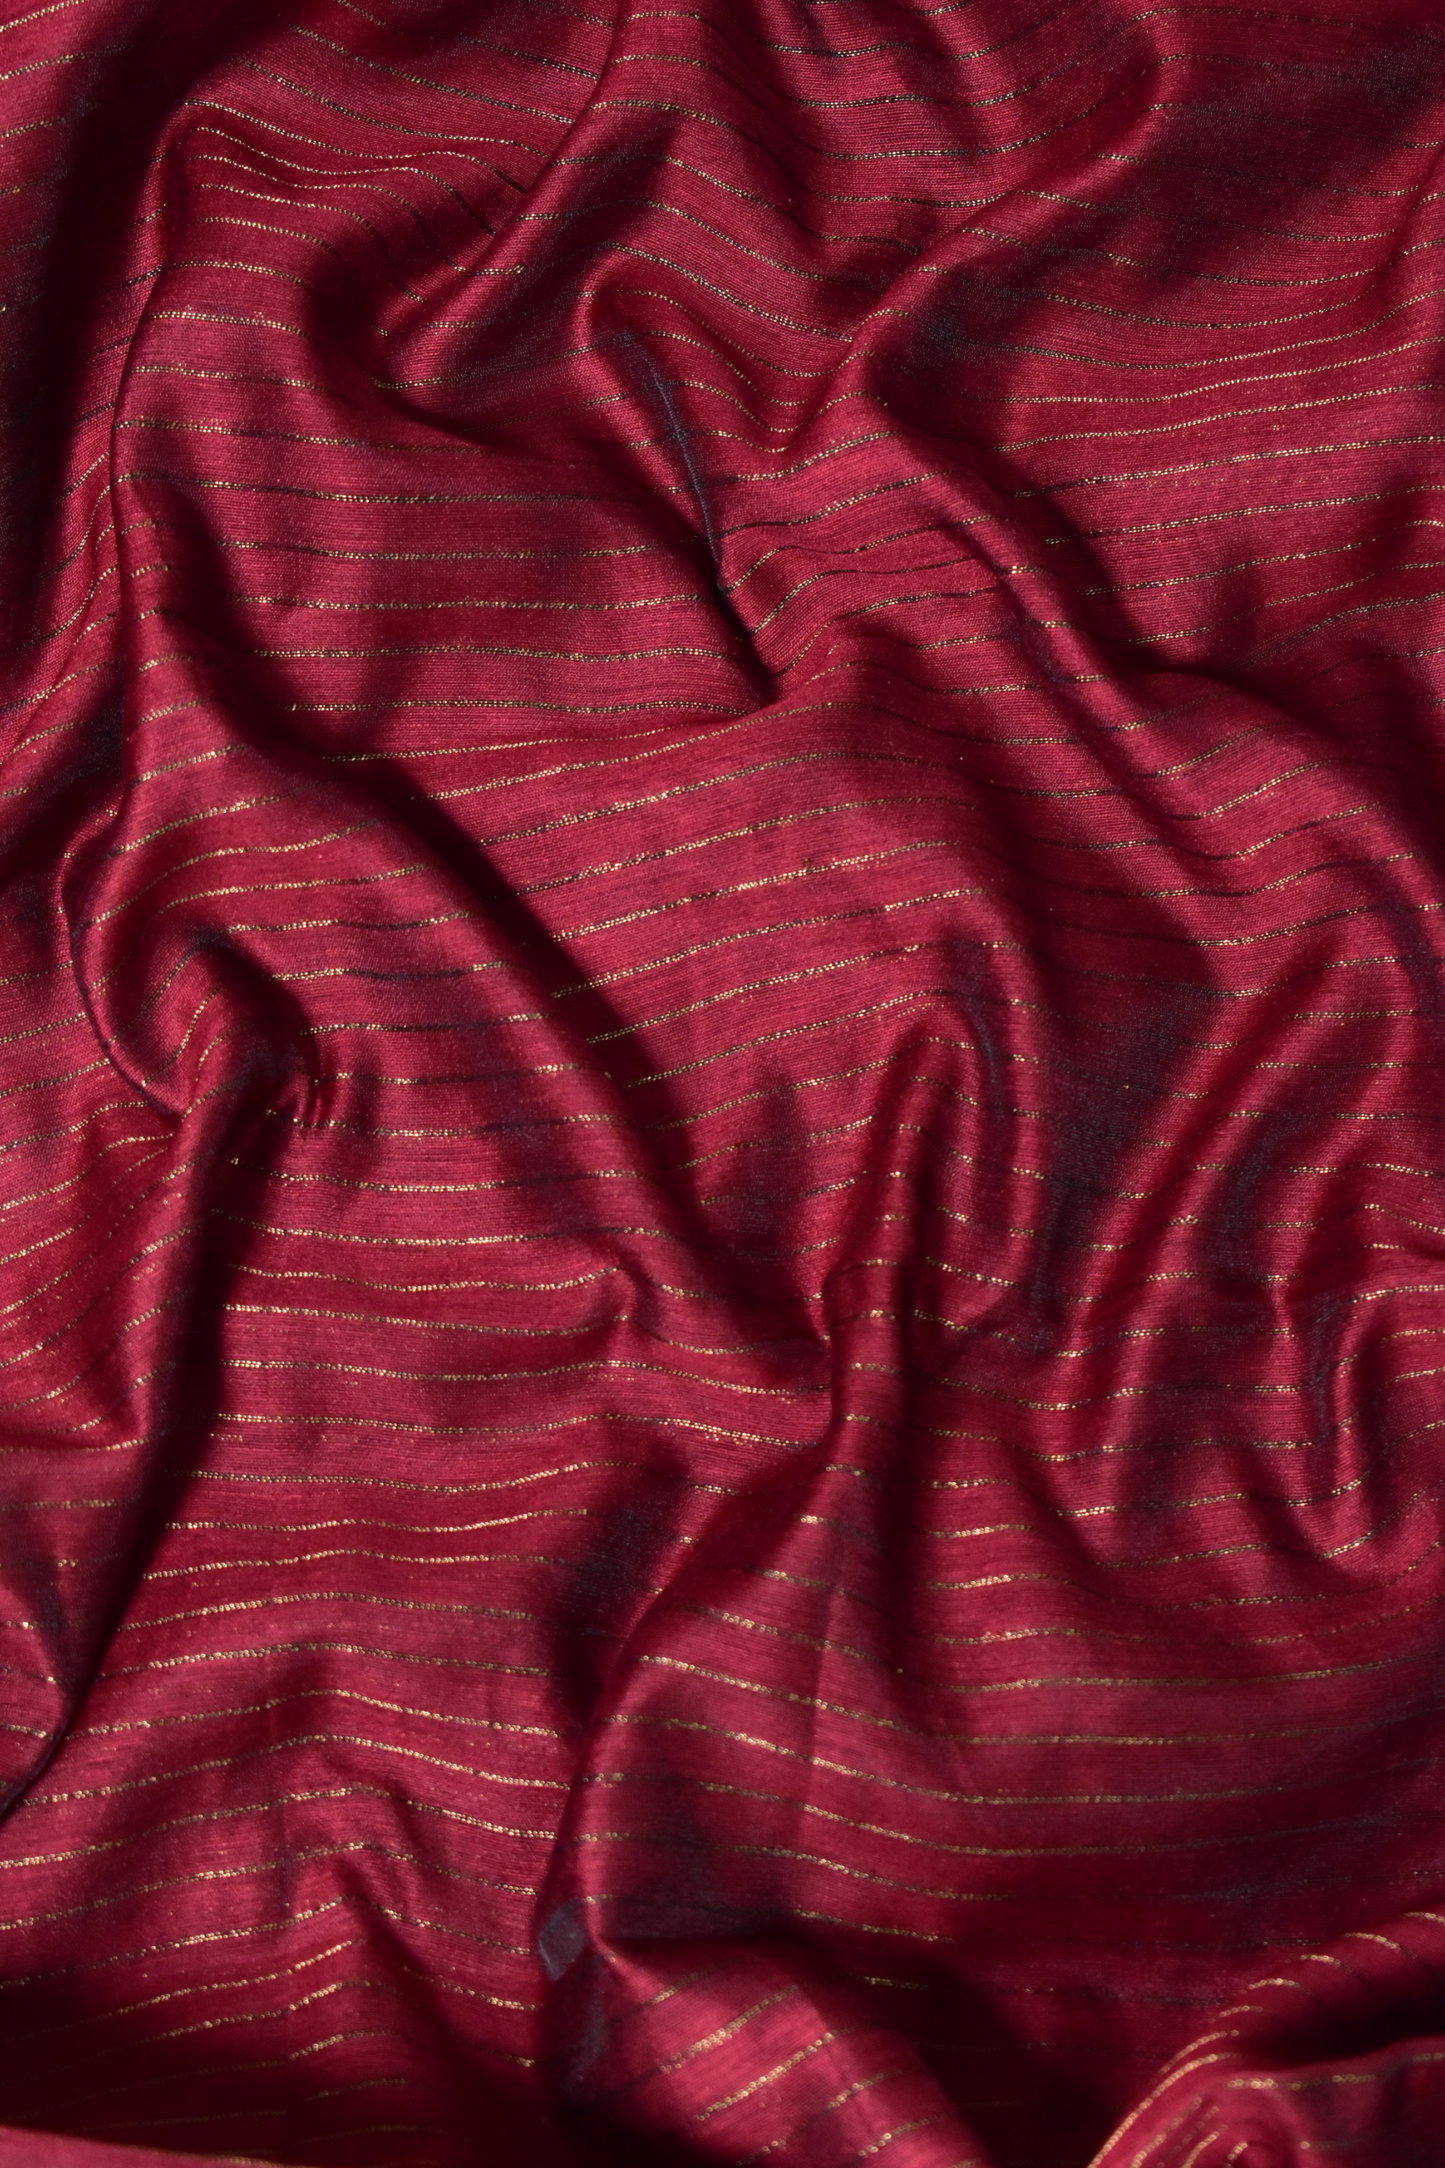 Blended Cotton Saree with Woven Zari Stripes & Tassles,  Maroon, SR1003